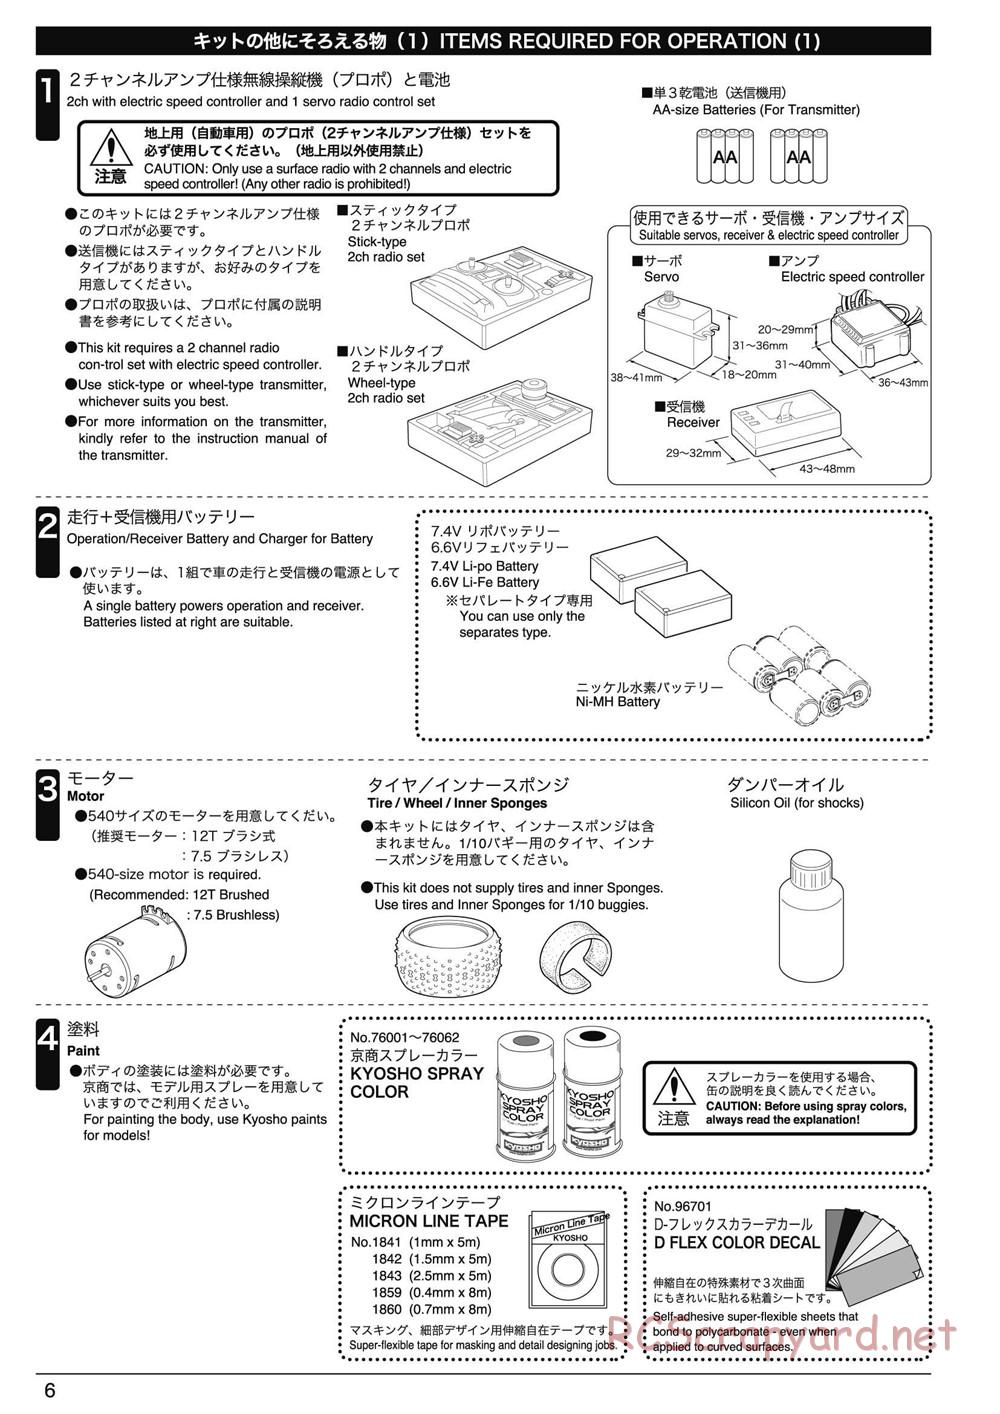 Kyosho - Lazer ZX-5 FS2 SP - Manual - Page 6